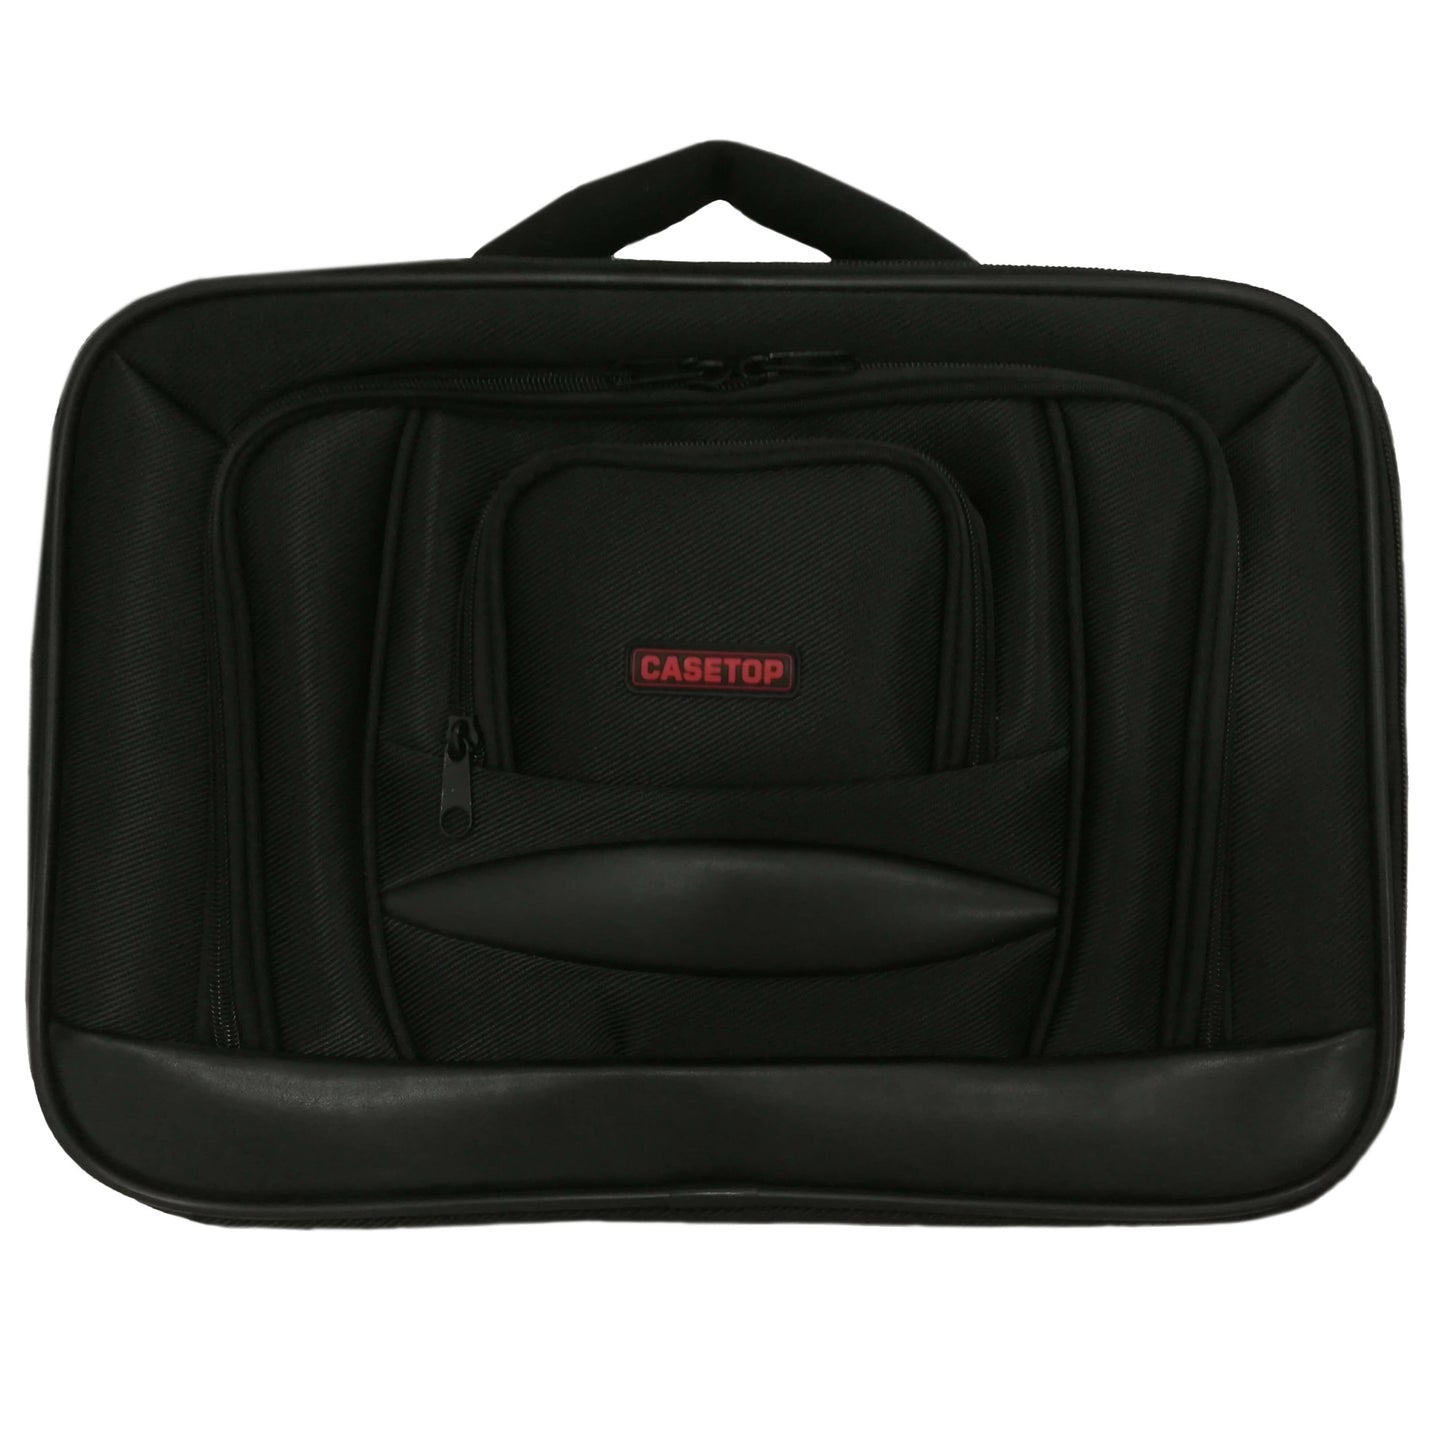 Provideolb Laptop Messenger & Shoulder Bags Casetop Protective Laptop Bag Carrying Case with Shoulder Strap Fits Up to 13 Inch Display Black - TN7041